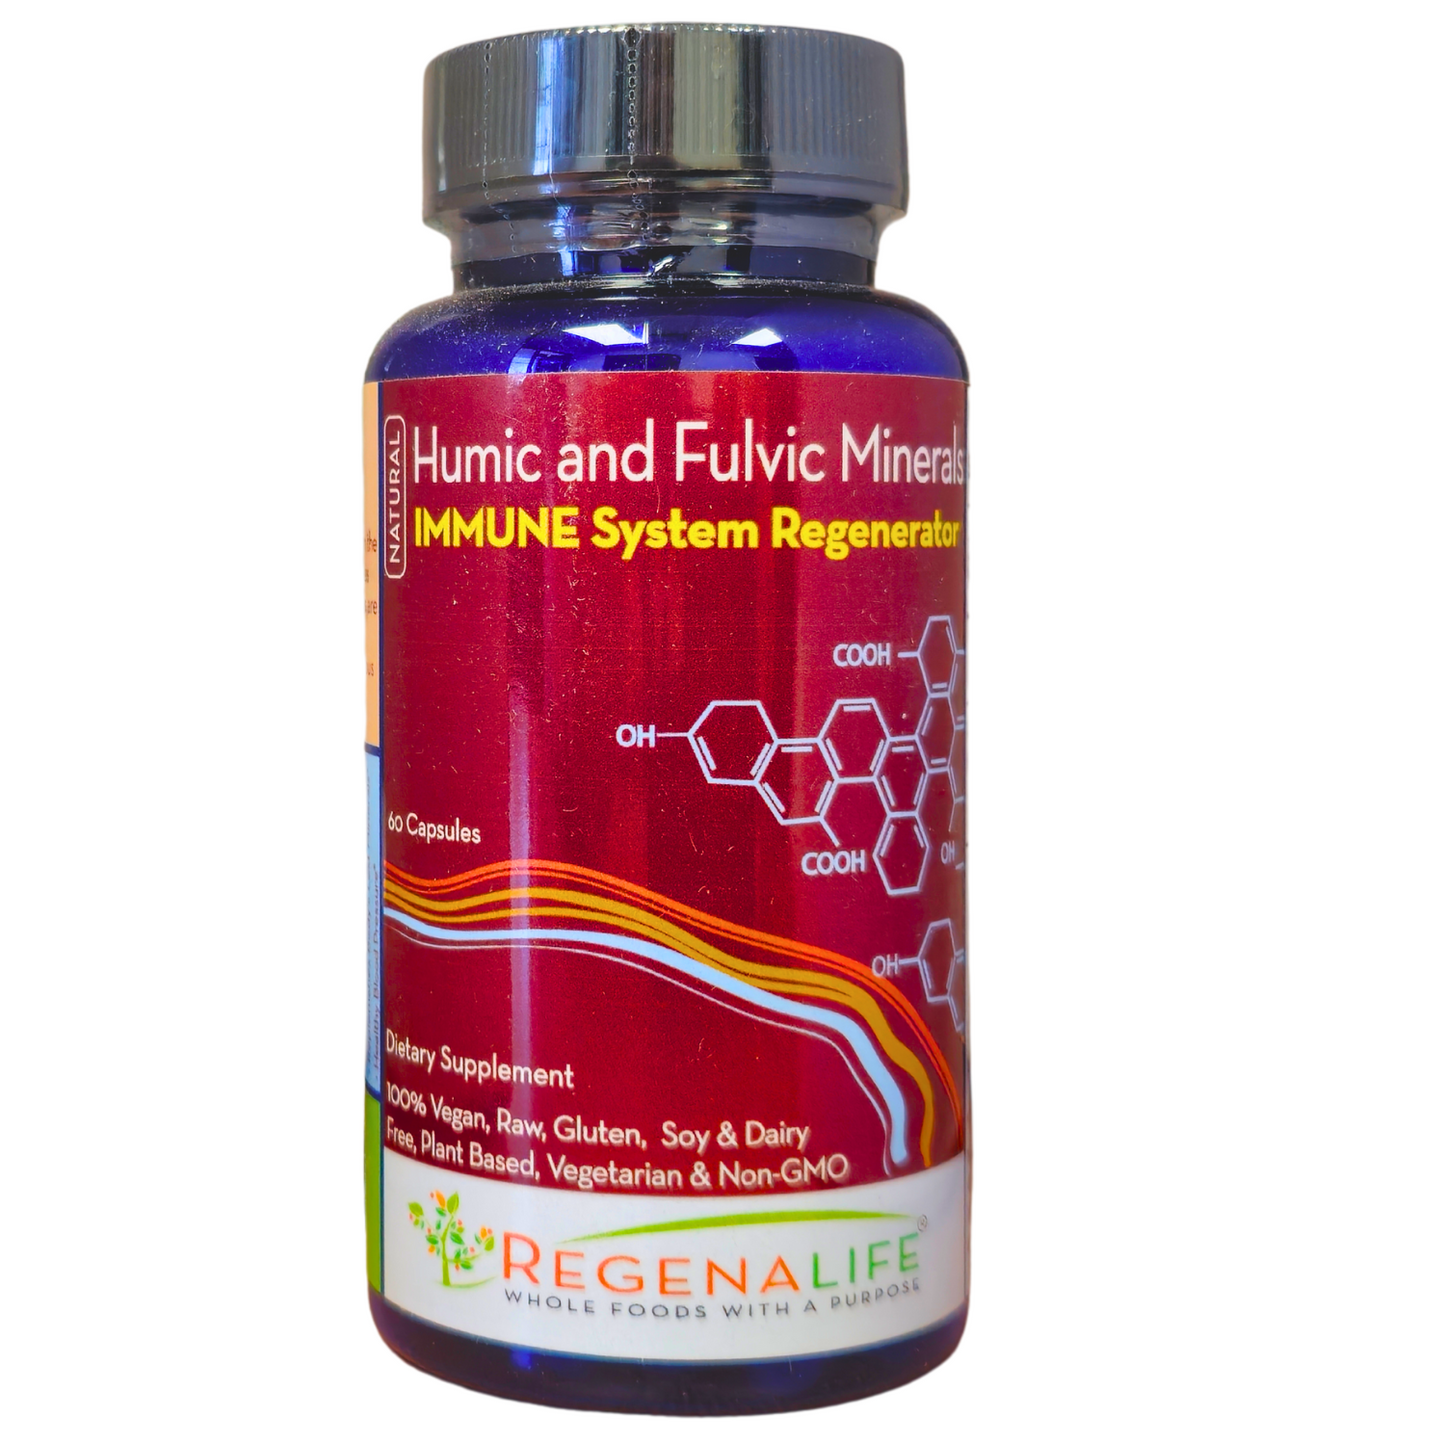 Humic and Fulvic Minerals- Immune System Regenerator - 60 Capsules